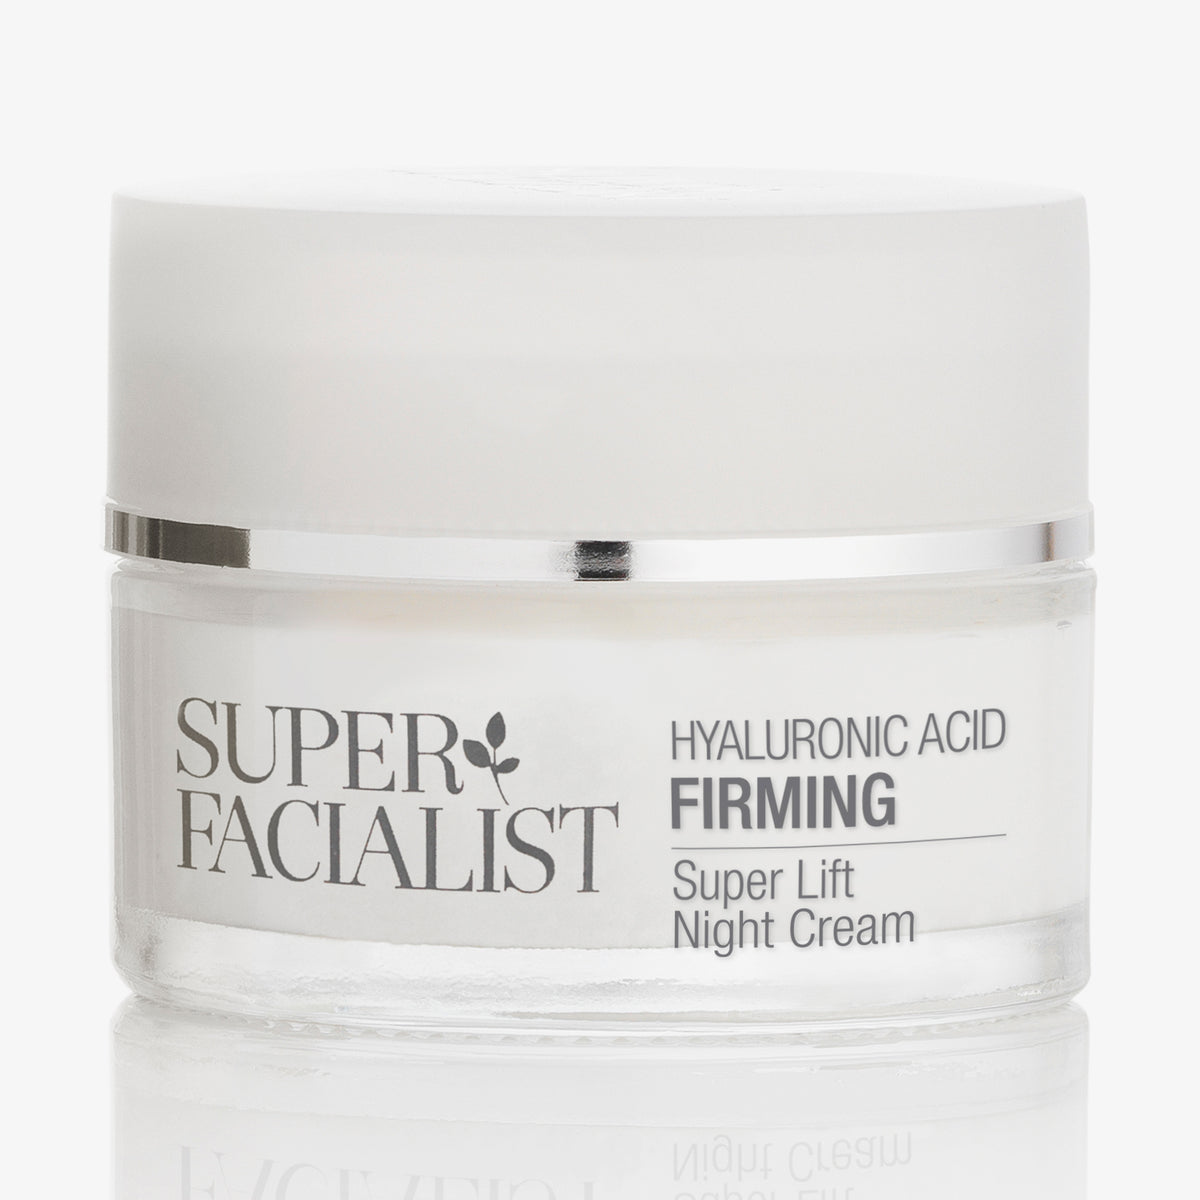 Super Facialist | Hyaluronic Acid Firming Super Lift Night Cream